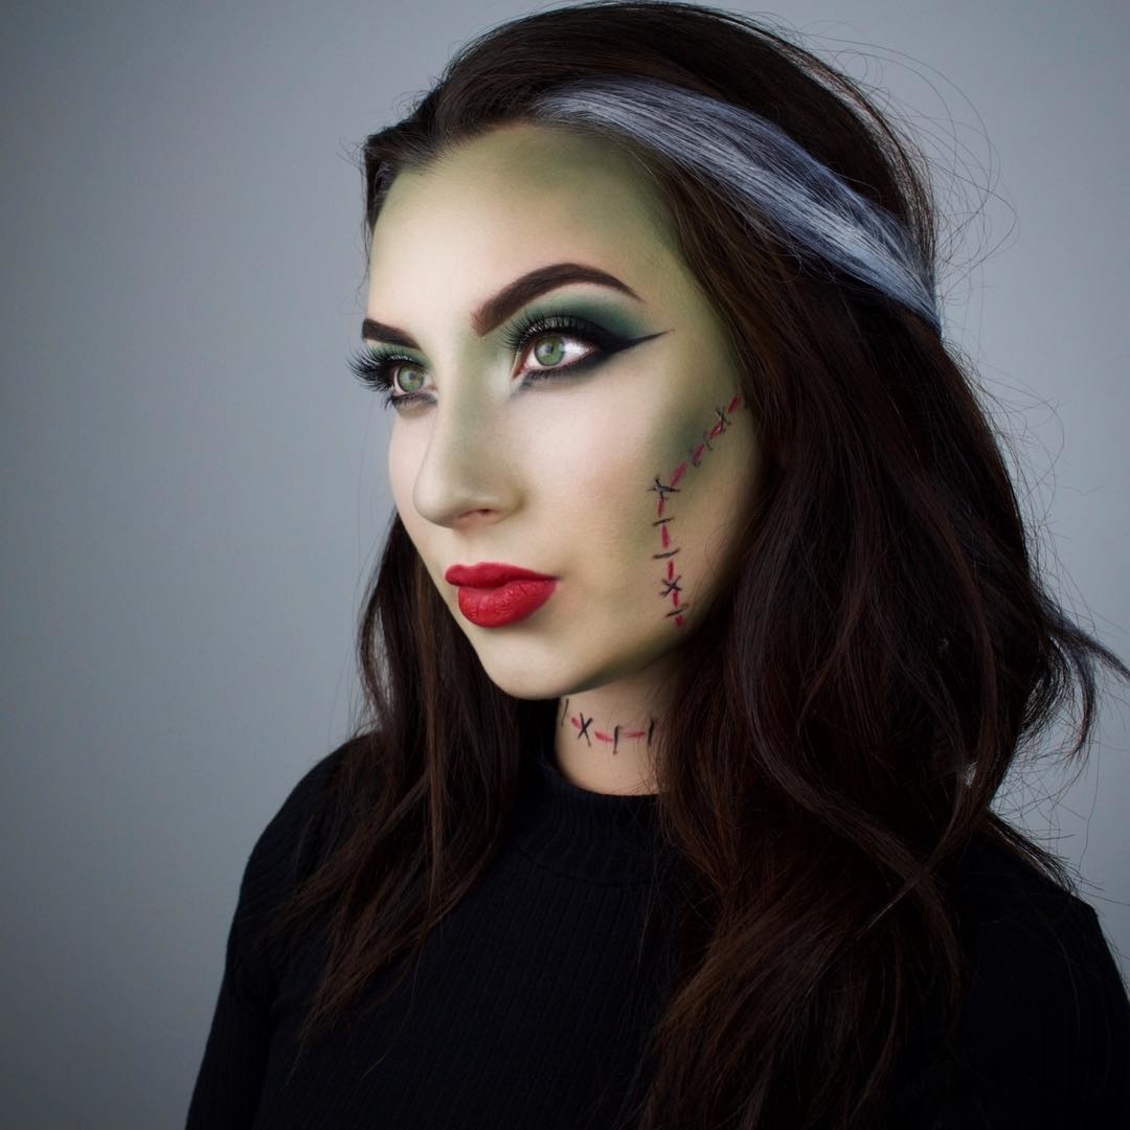 Bride of Frankenstein makeup and hair